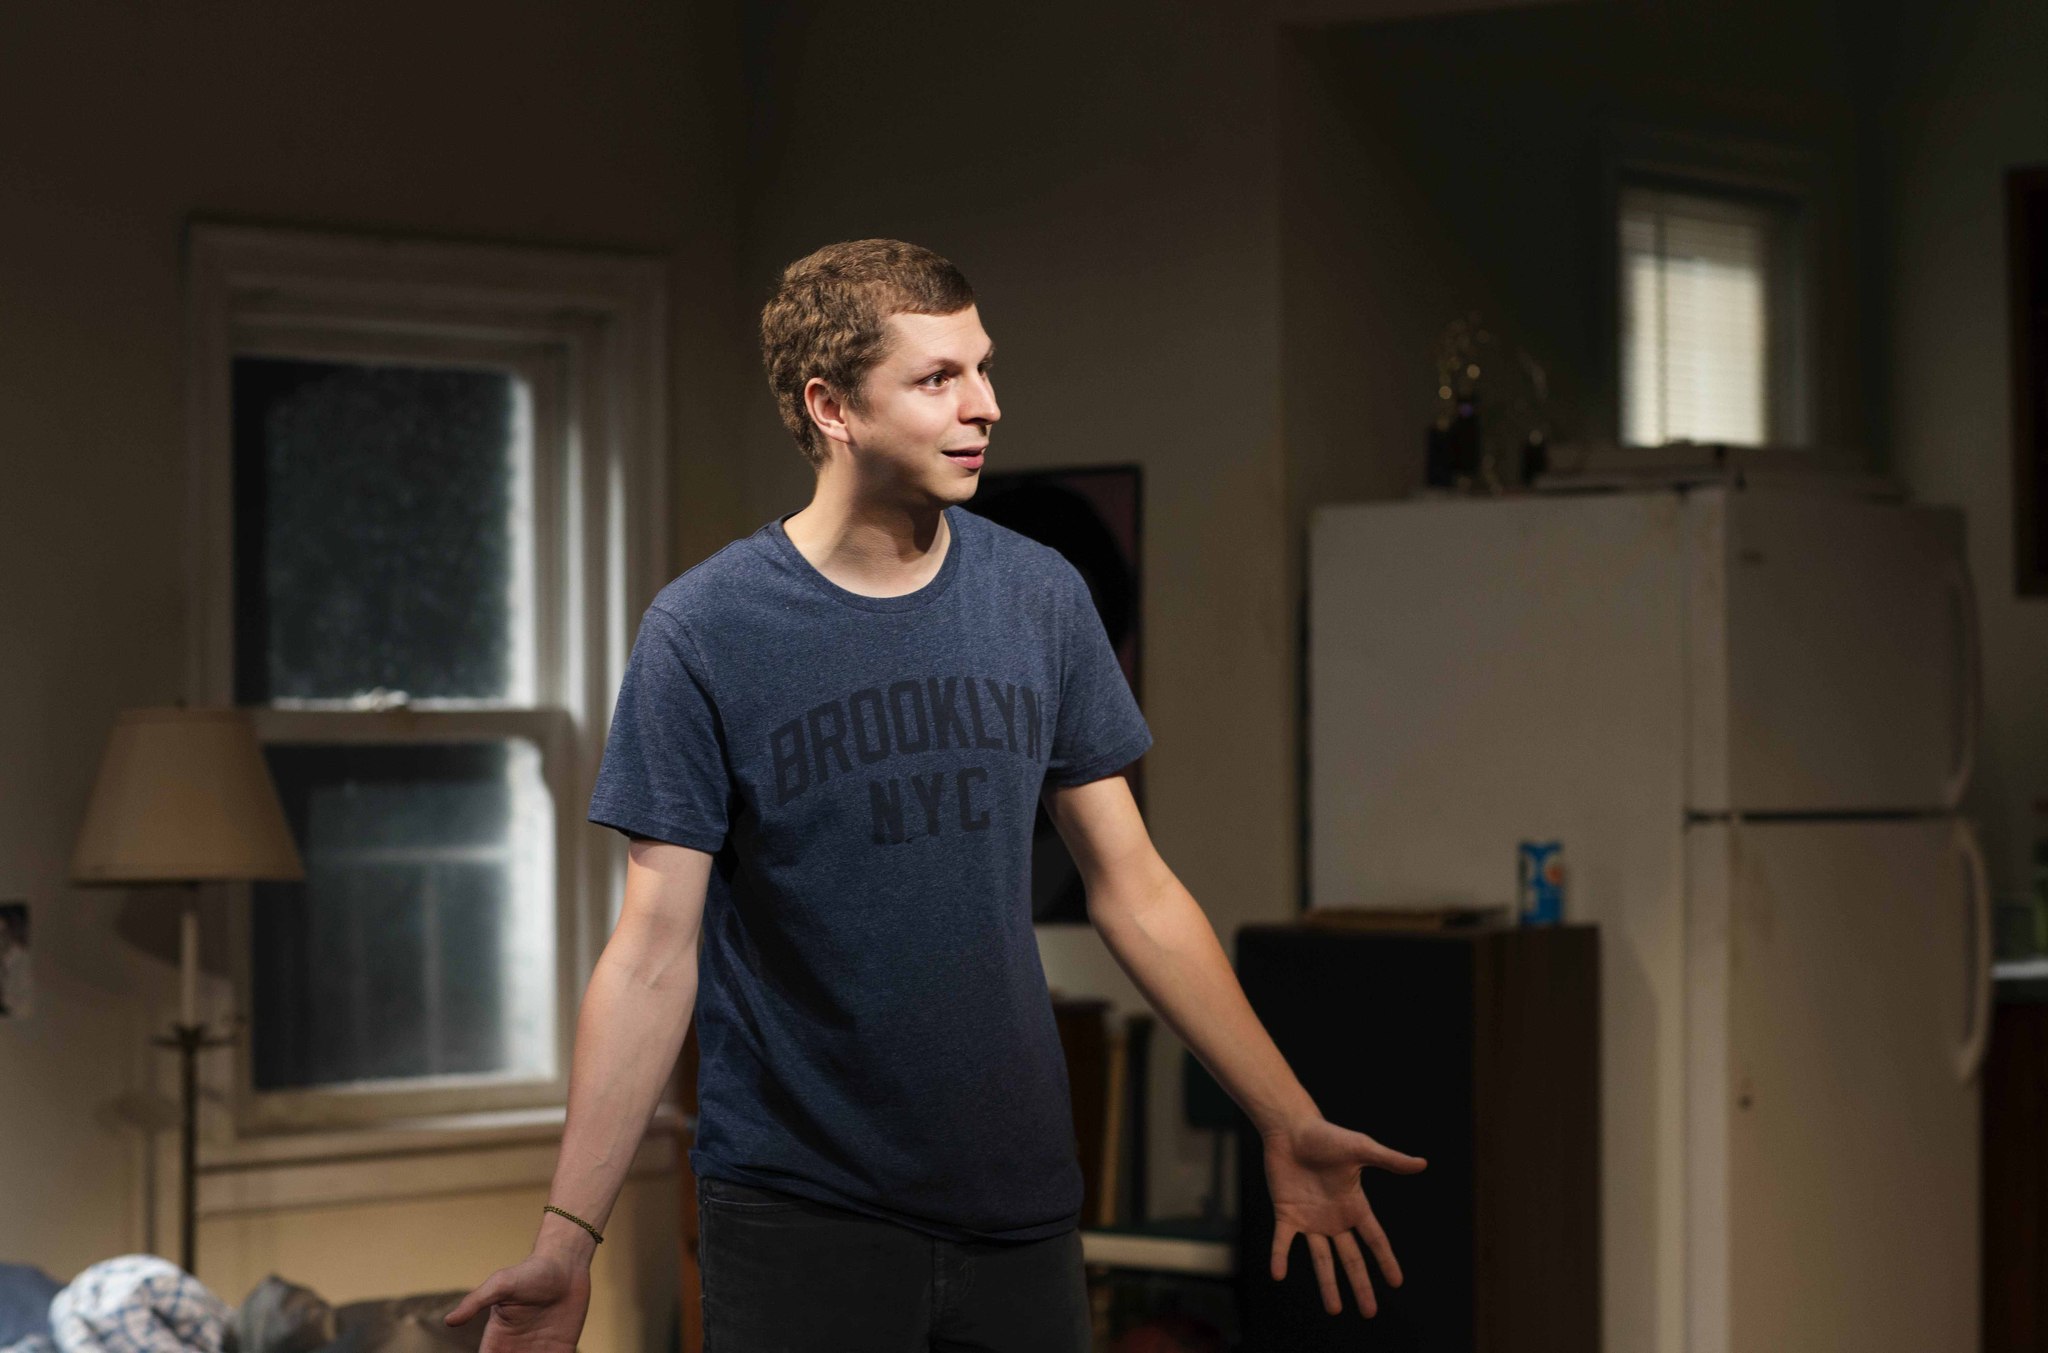 Three bright performances on Broadway: Nathan Lane, Michael Cera and Alex Sharp